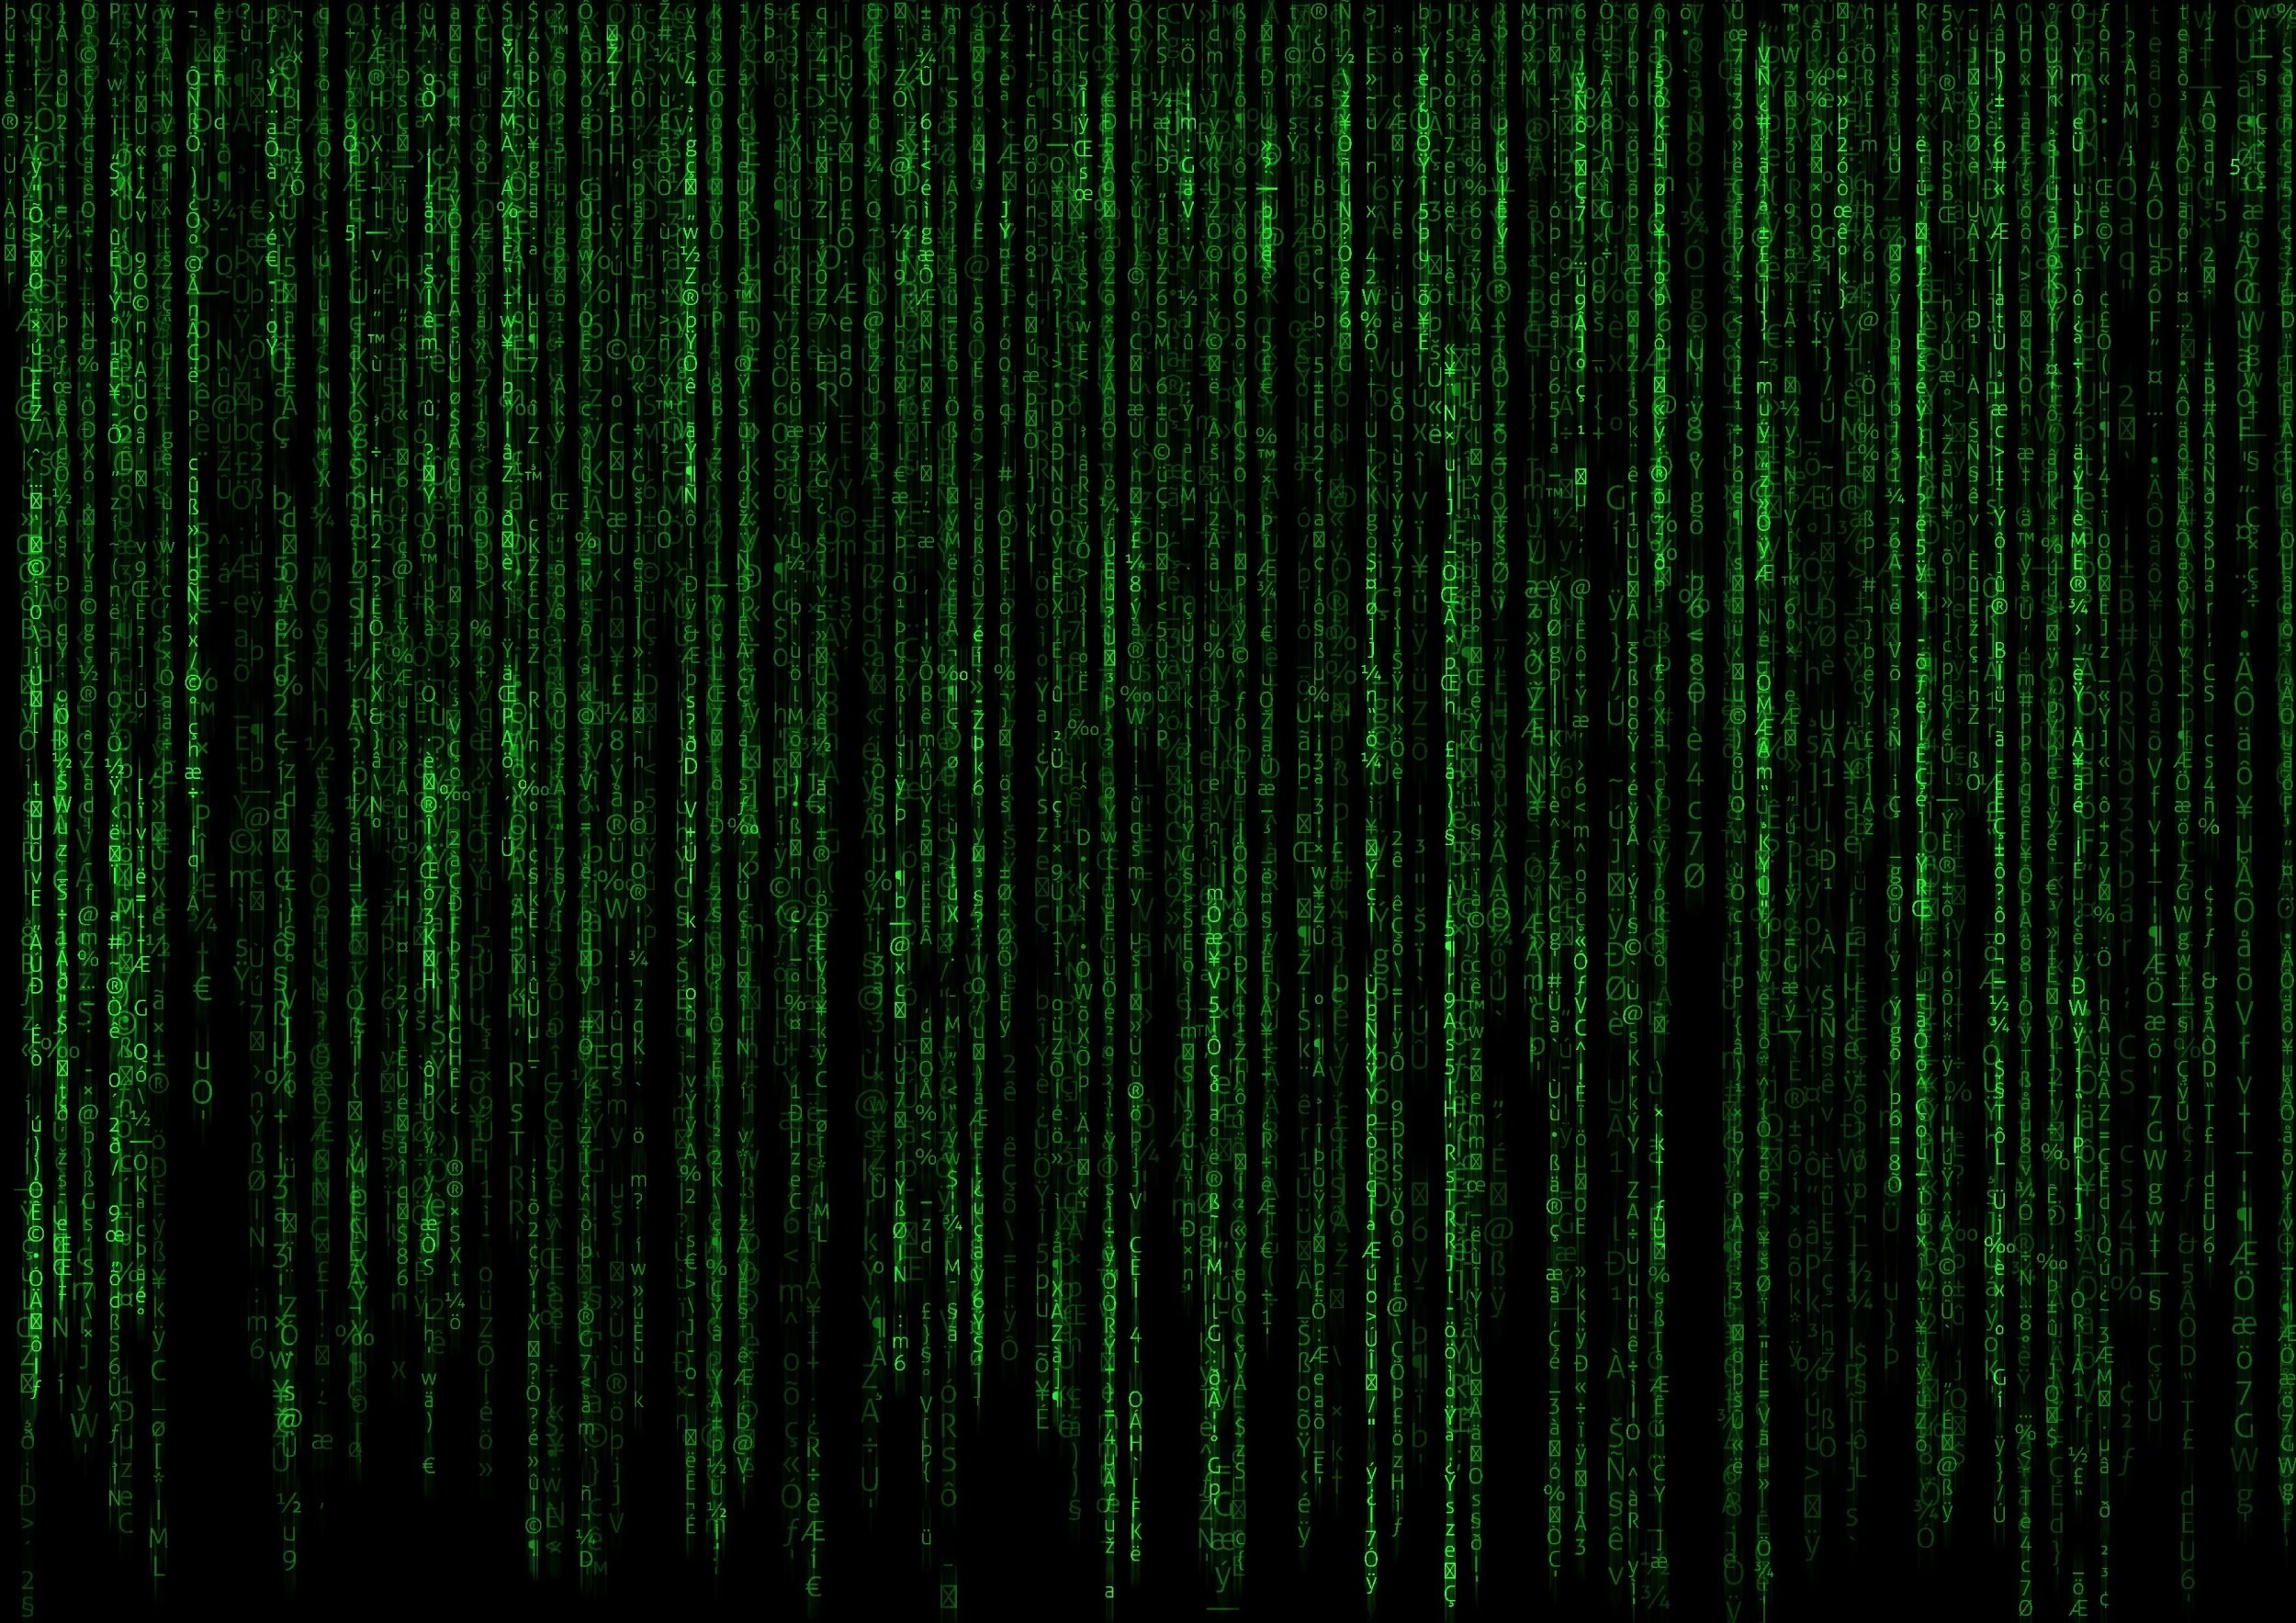 Viewing the Matrix Code